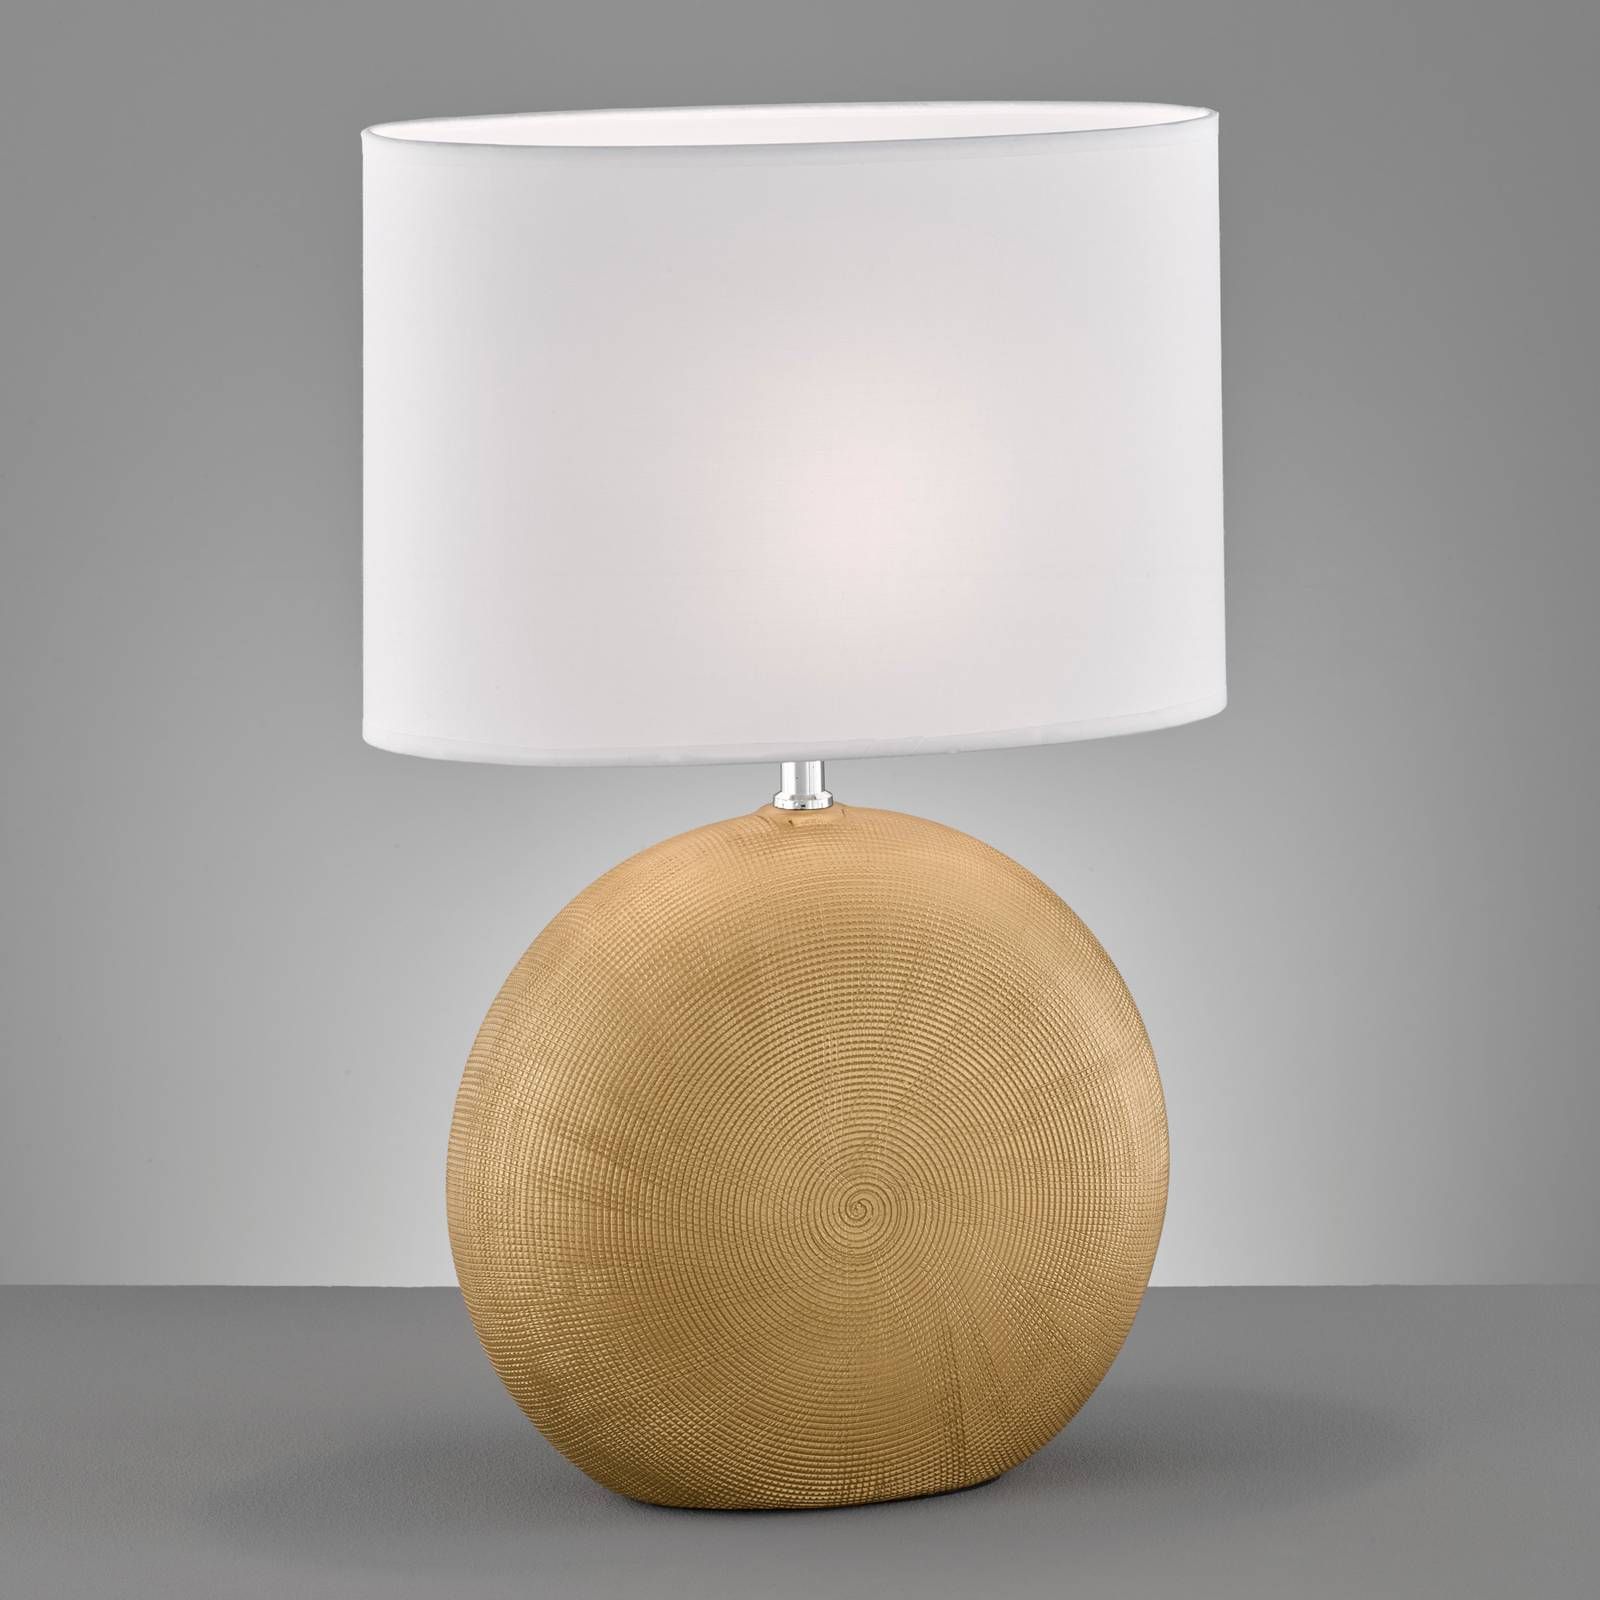 FISCHER & HONSEL Stolná lampa Foro, zlatá/biela, výška 53 cm, Obývacia izba / jedáleň, keramika, látka, E27, 40W, L: 34 cm, K: 53cm